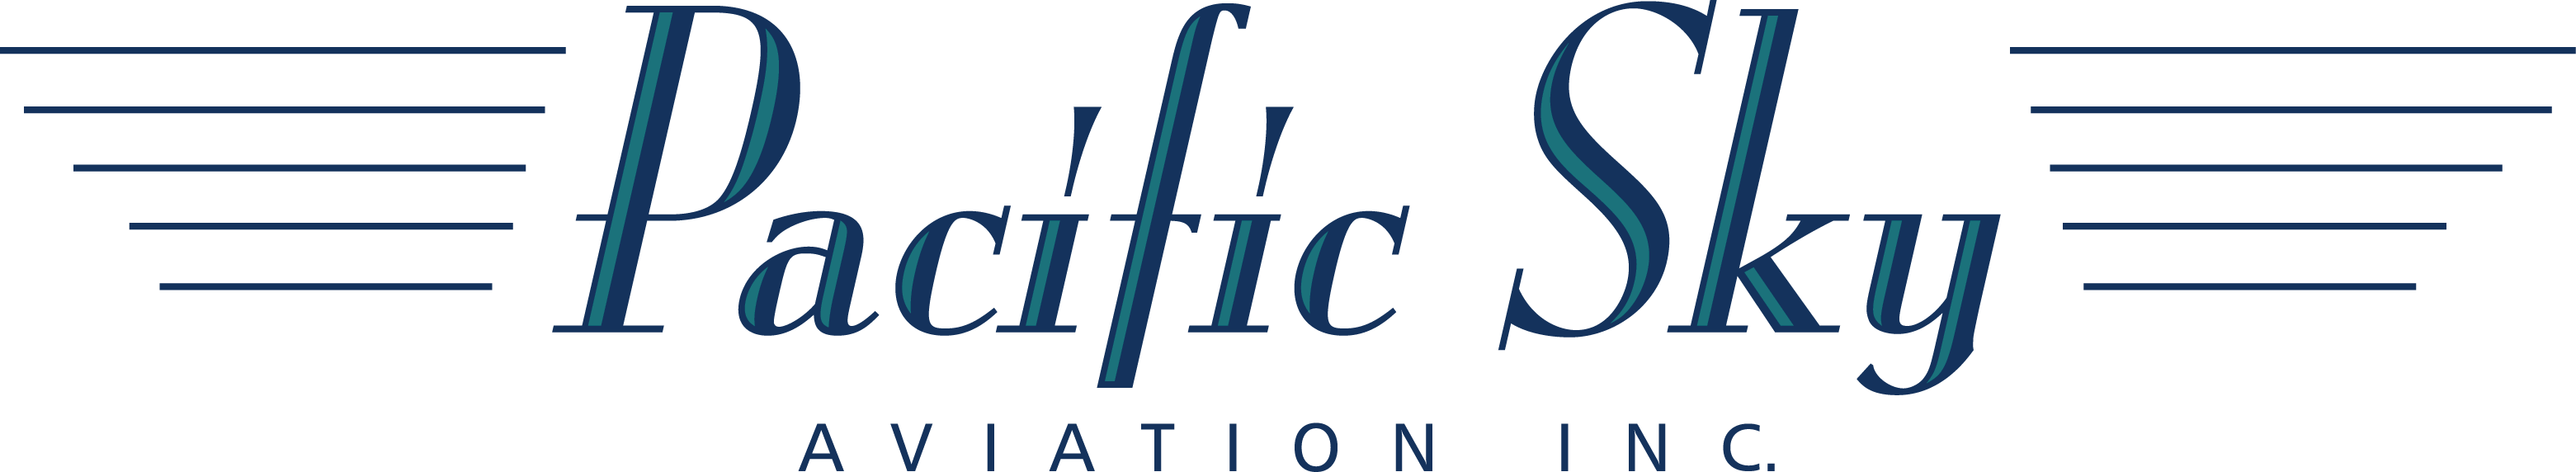 Pacific Sky logo